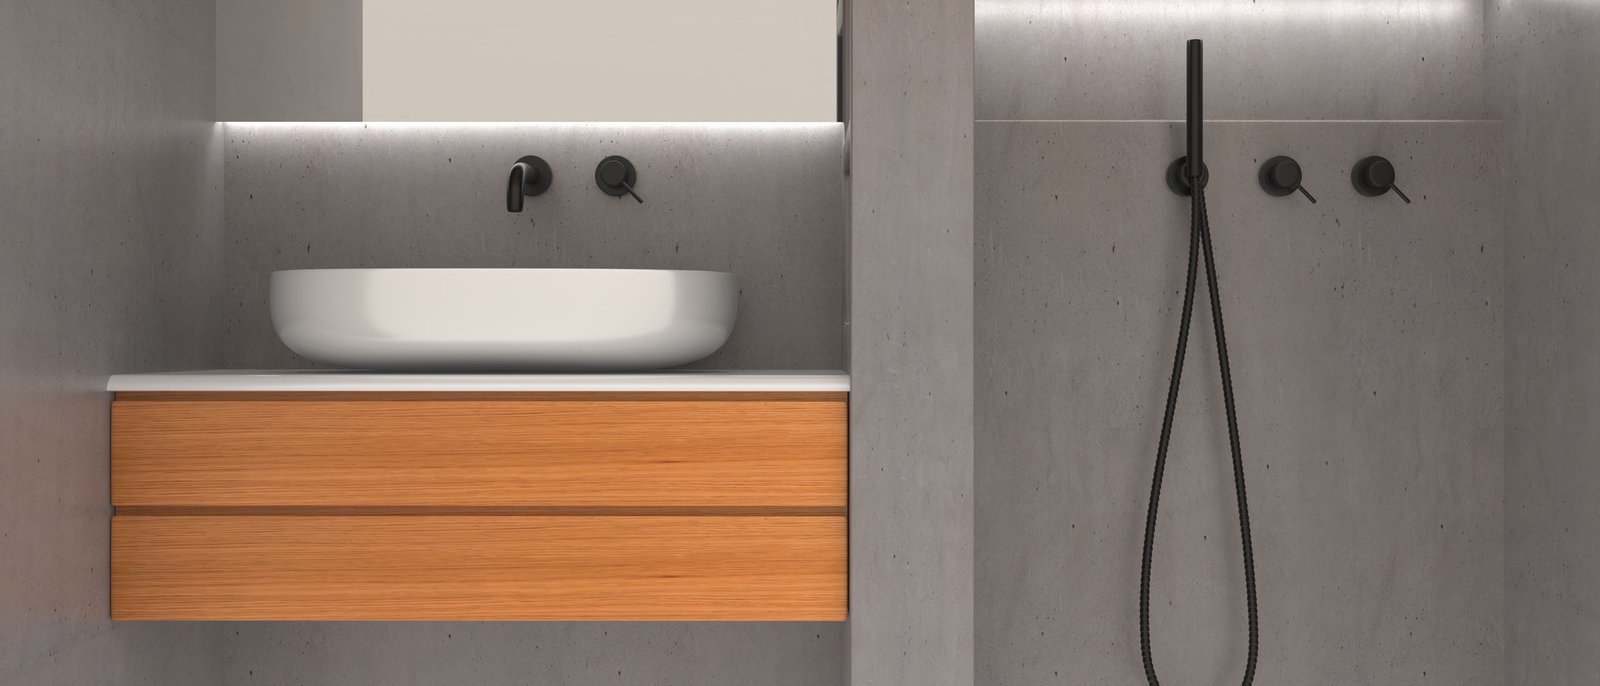 Bathroom interior modern minimal design. Black faucets and basin and shower taps. 3d illustration